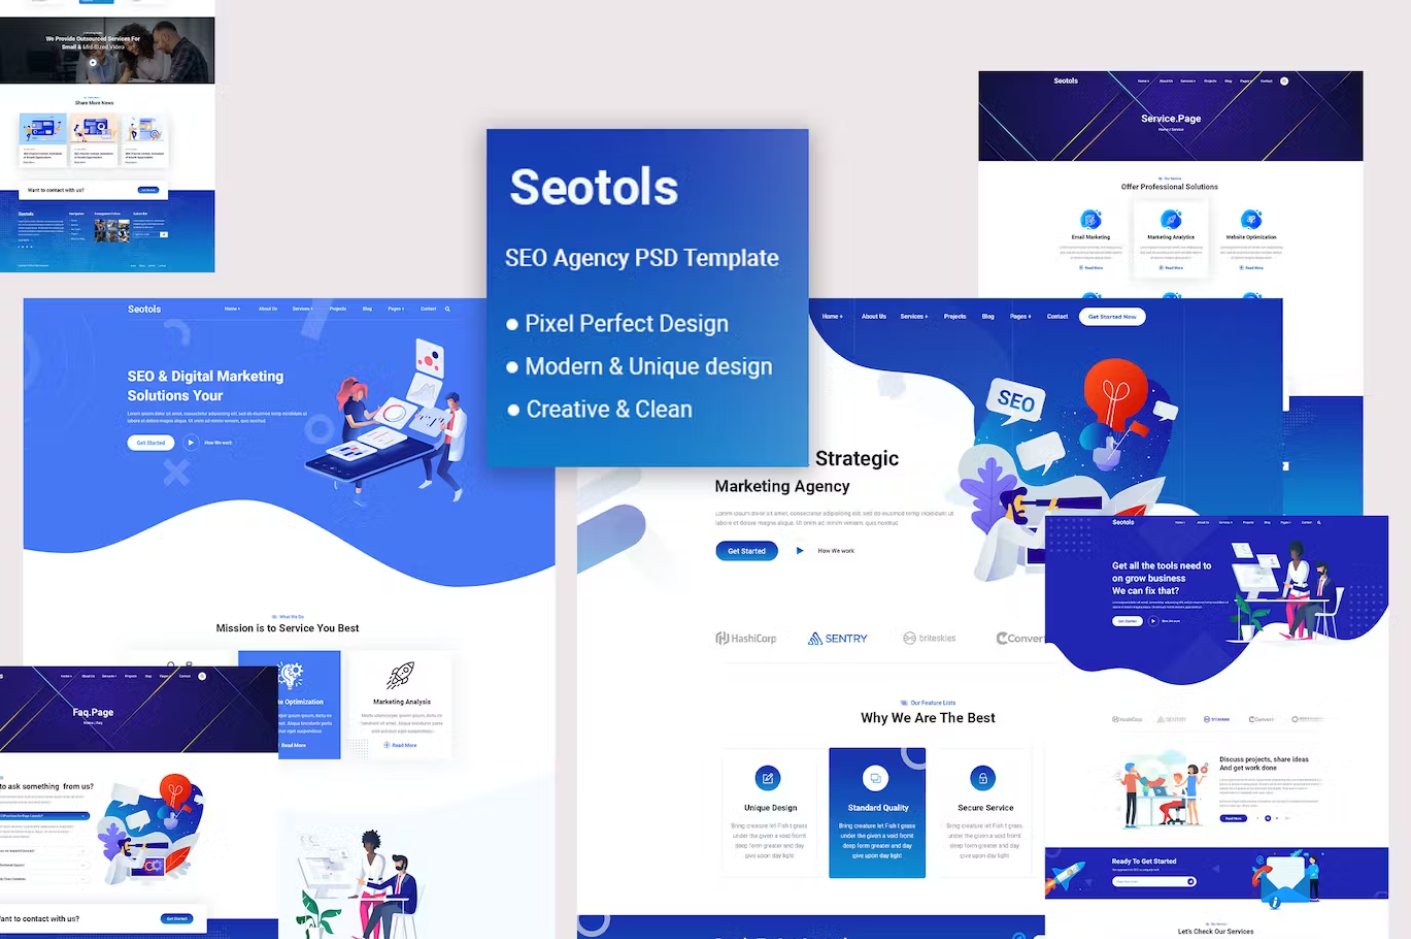 Premium Seotols SEO Agency PSD Template Free Download